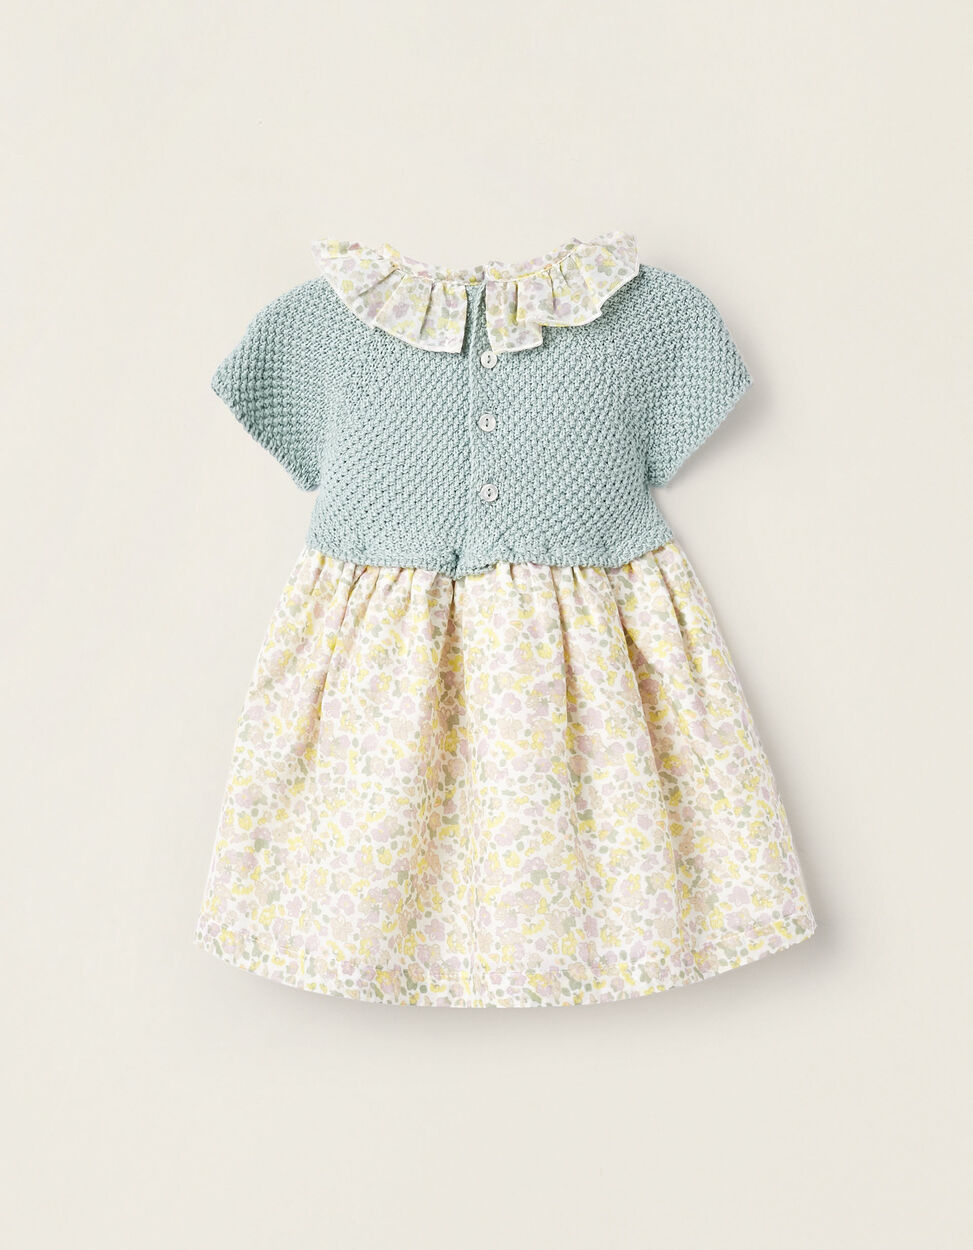 Buy Online Floral Dual Fabric Dress for Newborn Girls, Beige/Aqua Green